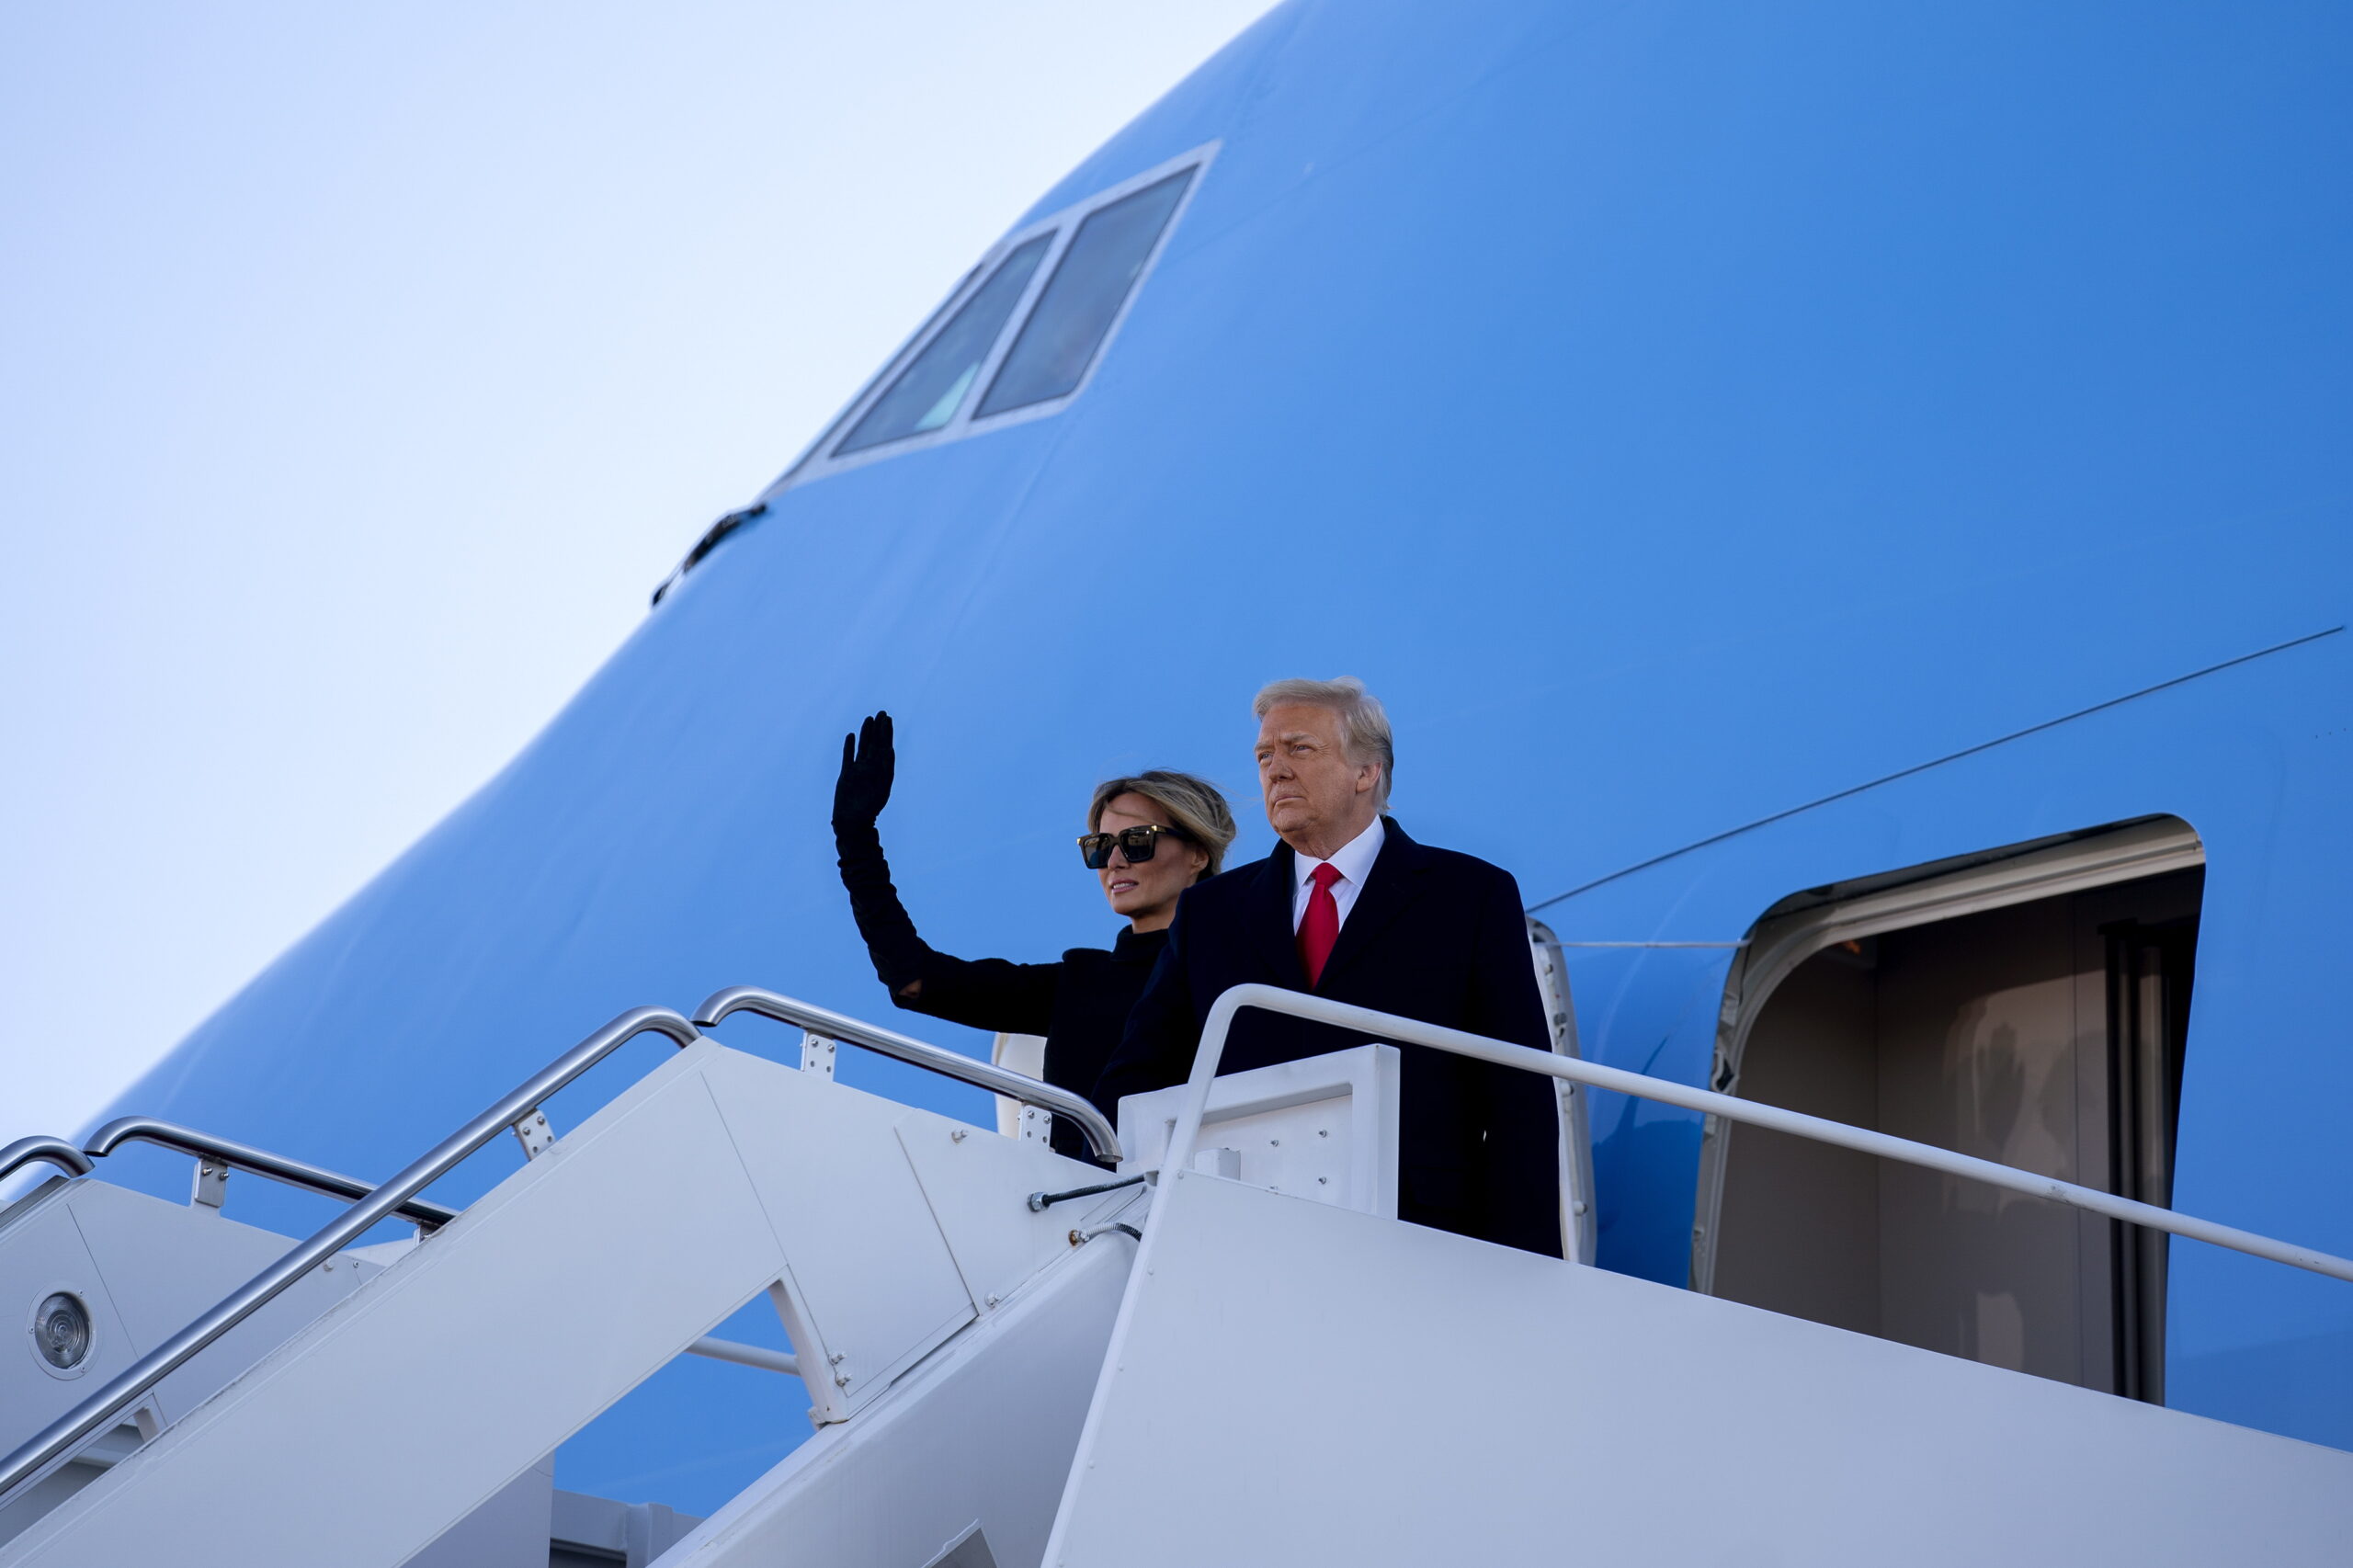 Трамп с супругой перед вылетом во Флориду. Фото EPA/STEFANI REYNOLDS/ POOL/Scanpix/Leta